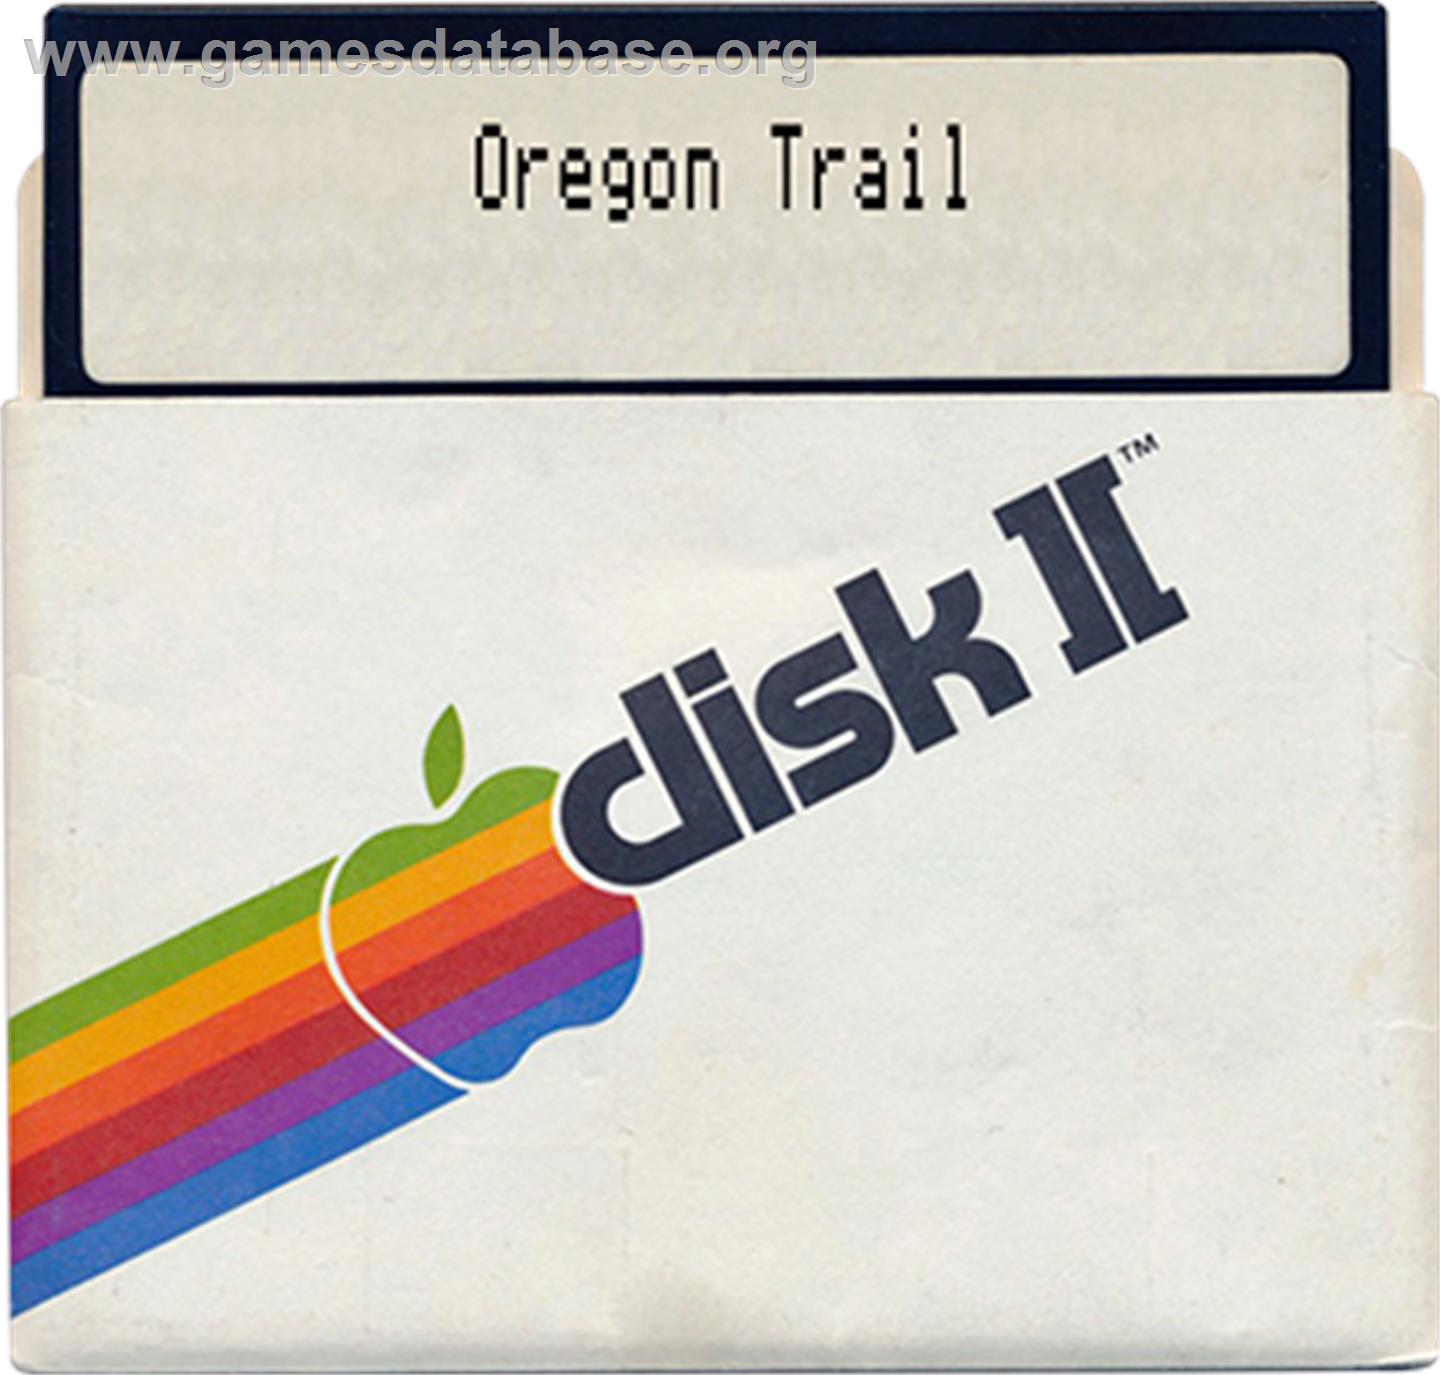 Oregon Trail - Apple II - Artwork - Disc